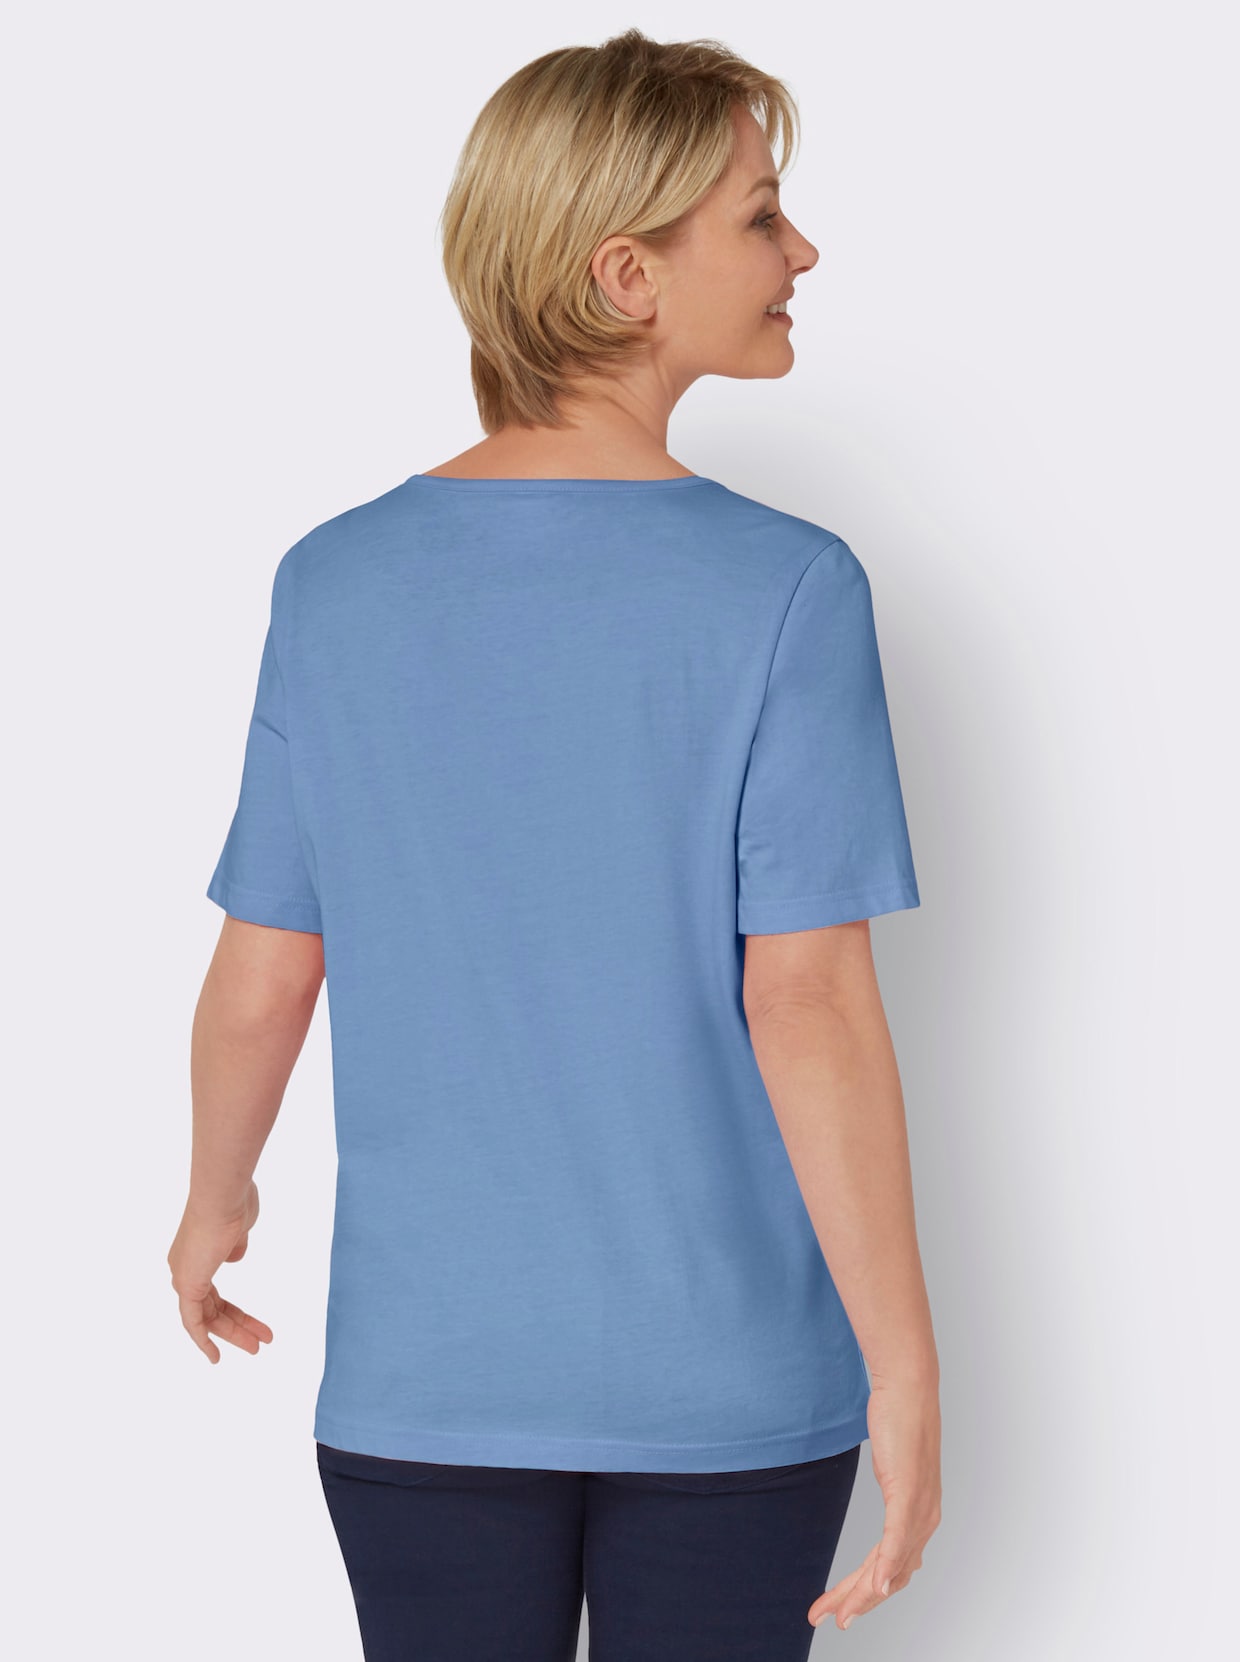 Kurzarm-Shirt - himmelblau